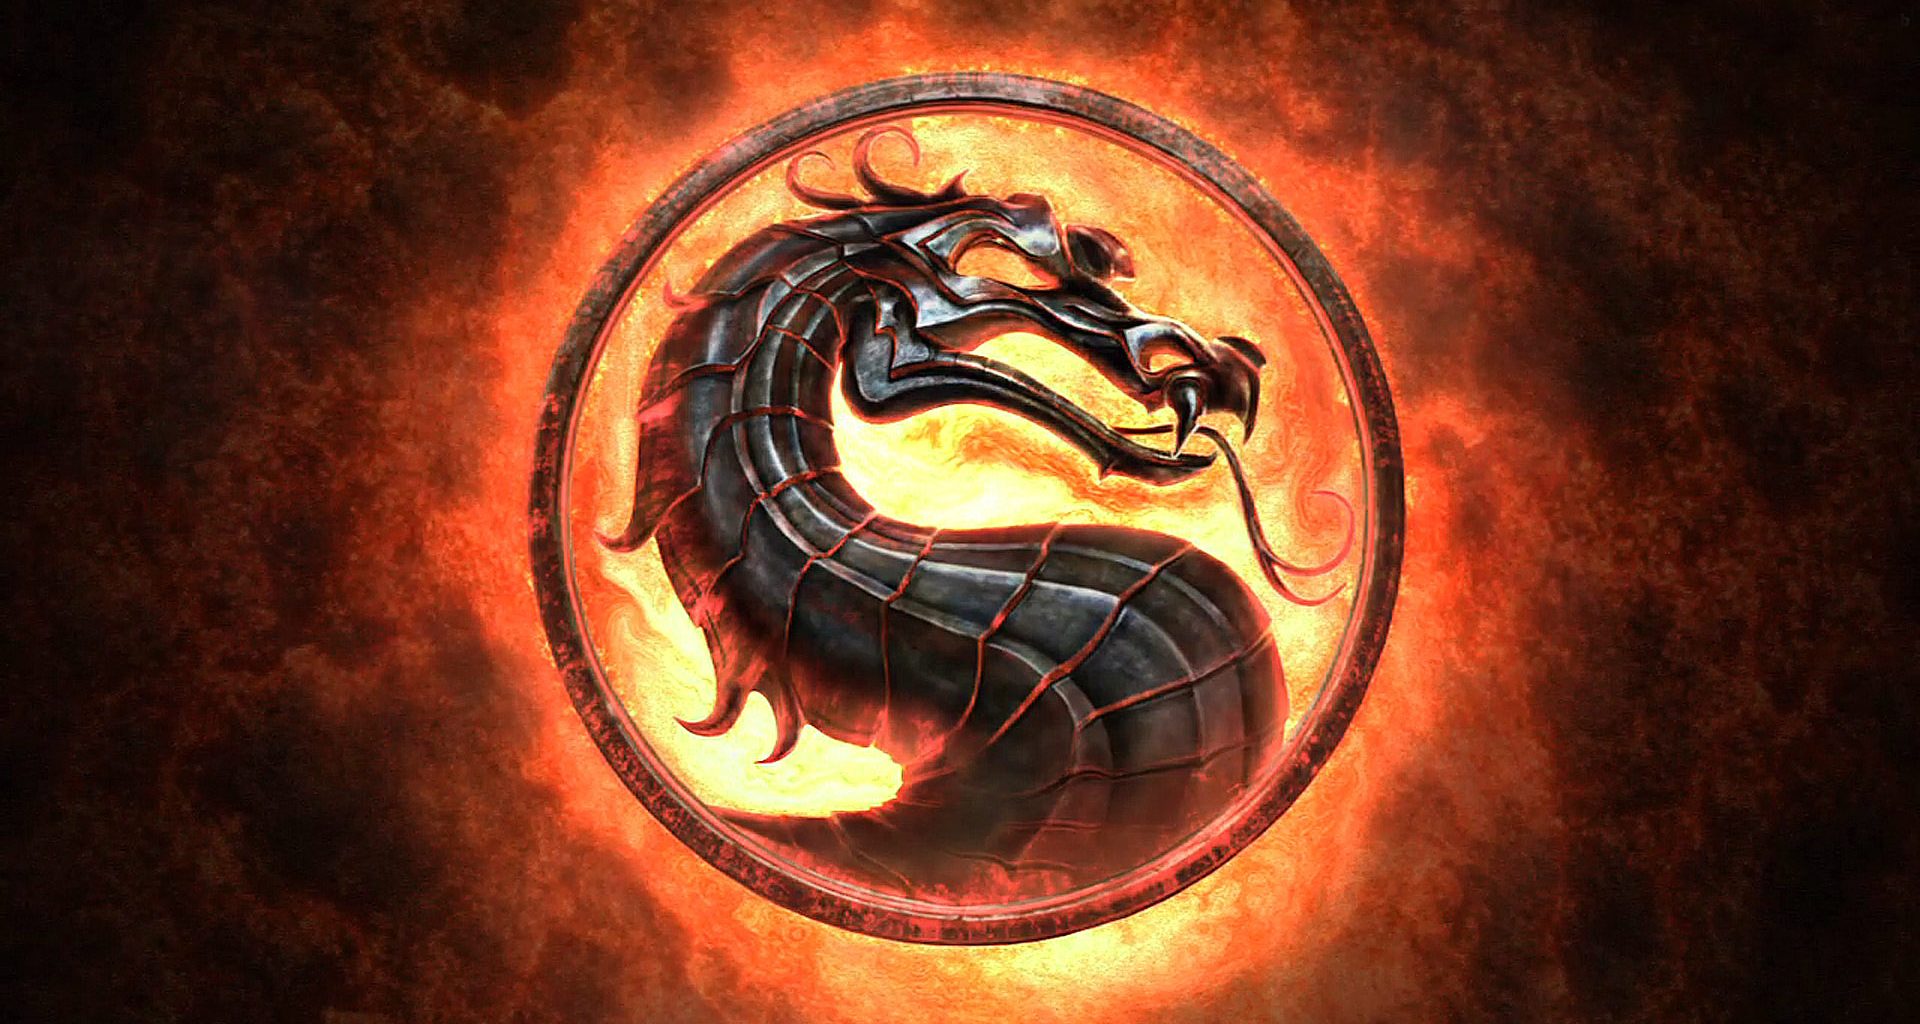 Jogos] Revisão: Mortal Kombat - Menos Fios